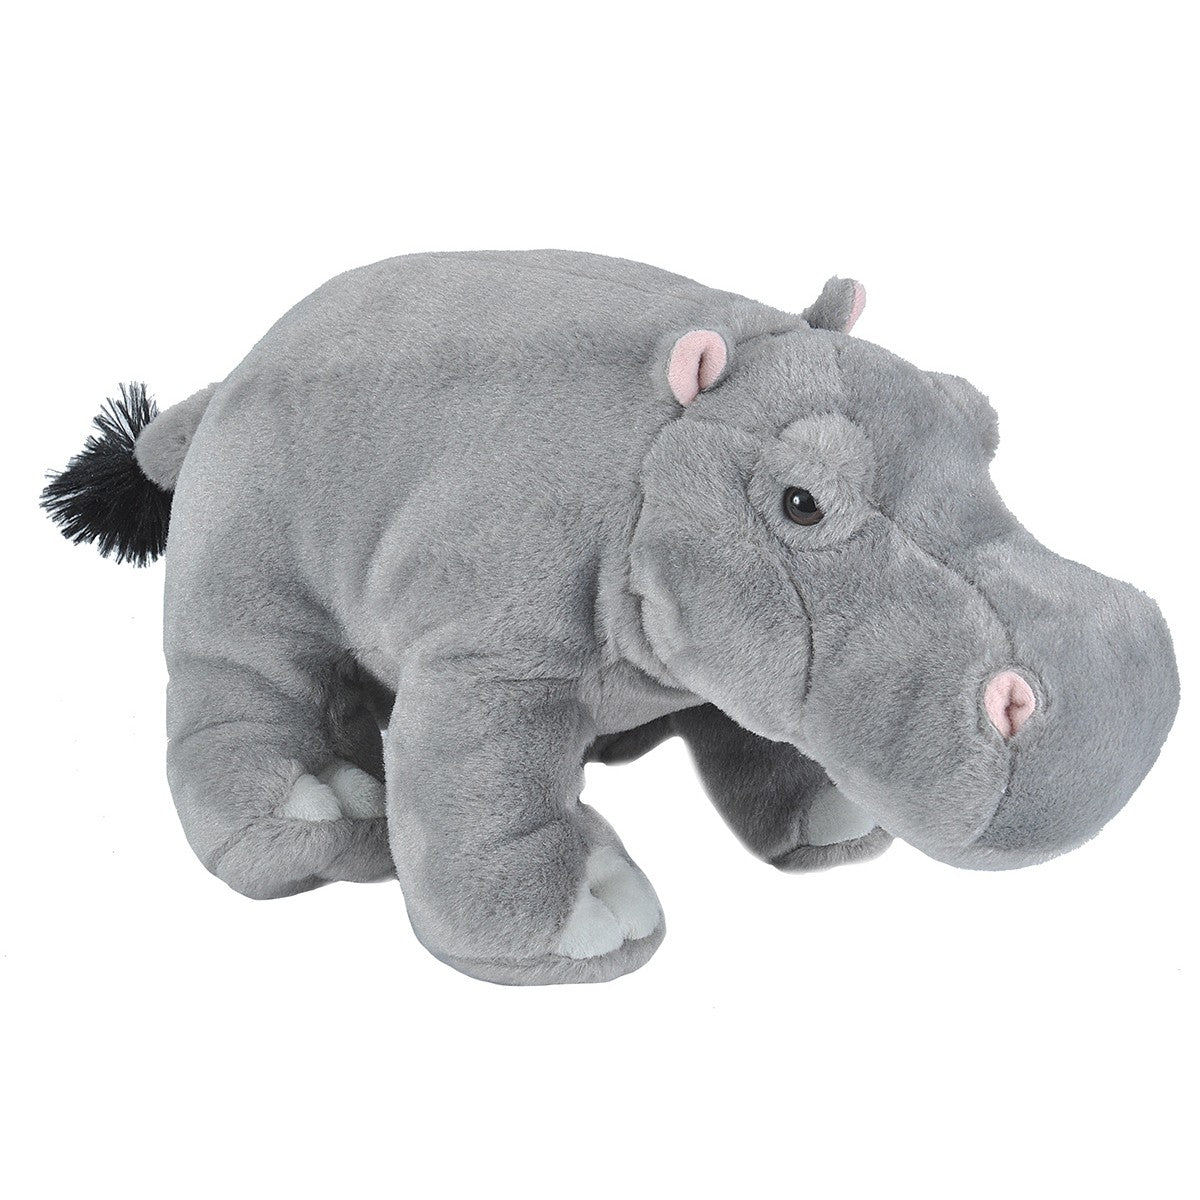 Hippo Stuffed Animal - 12"